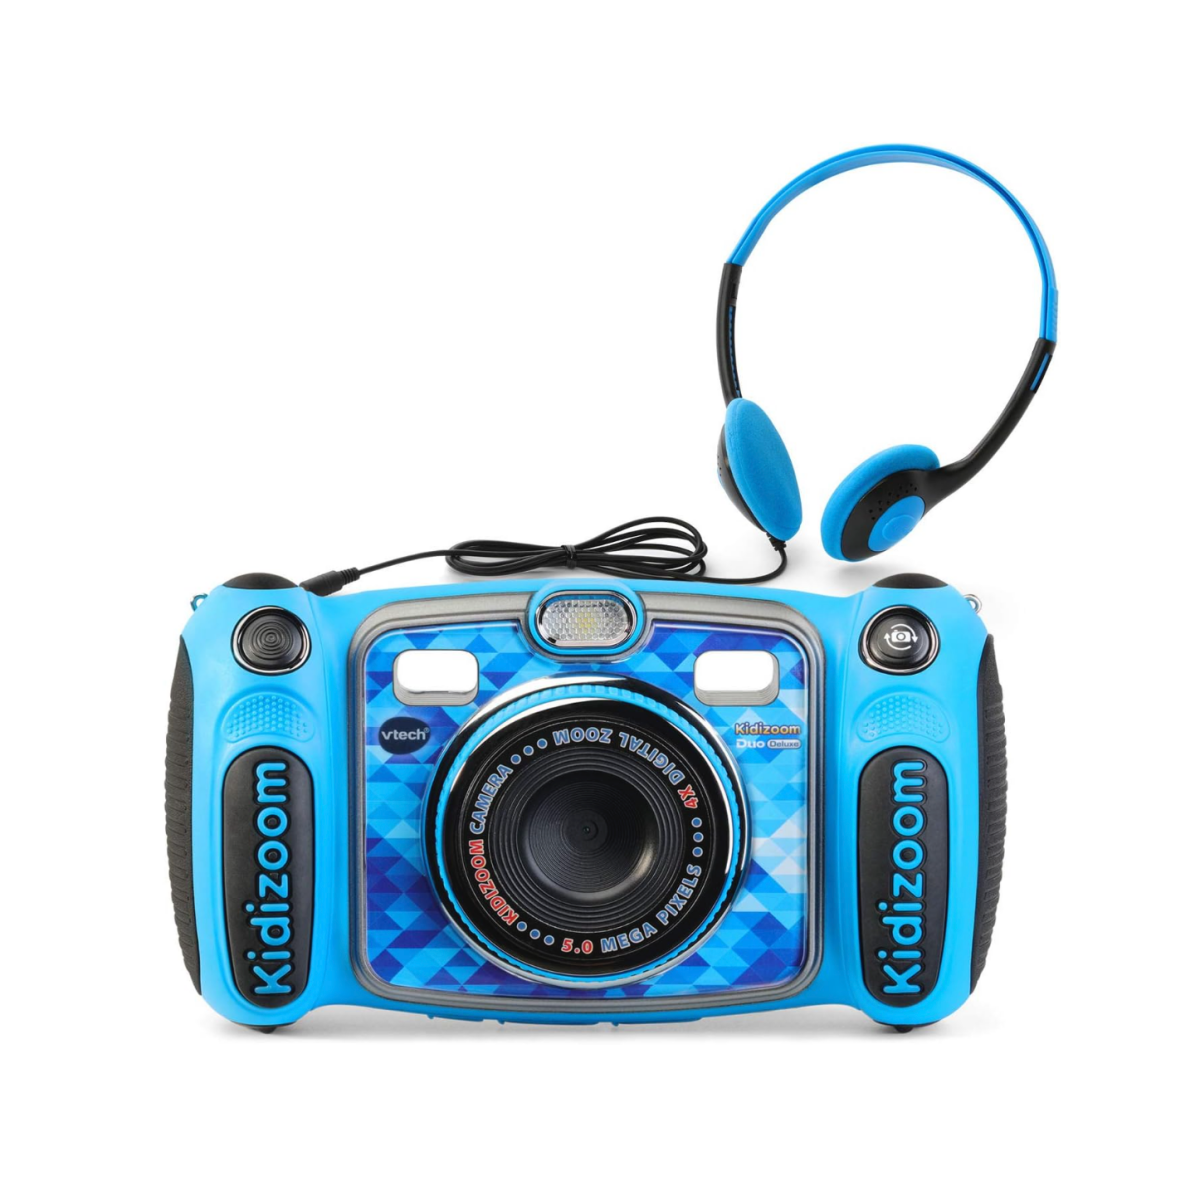 A VTech Kidizoom Duo 5.0 kids' camera